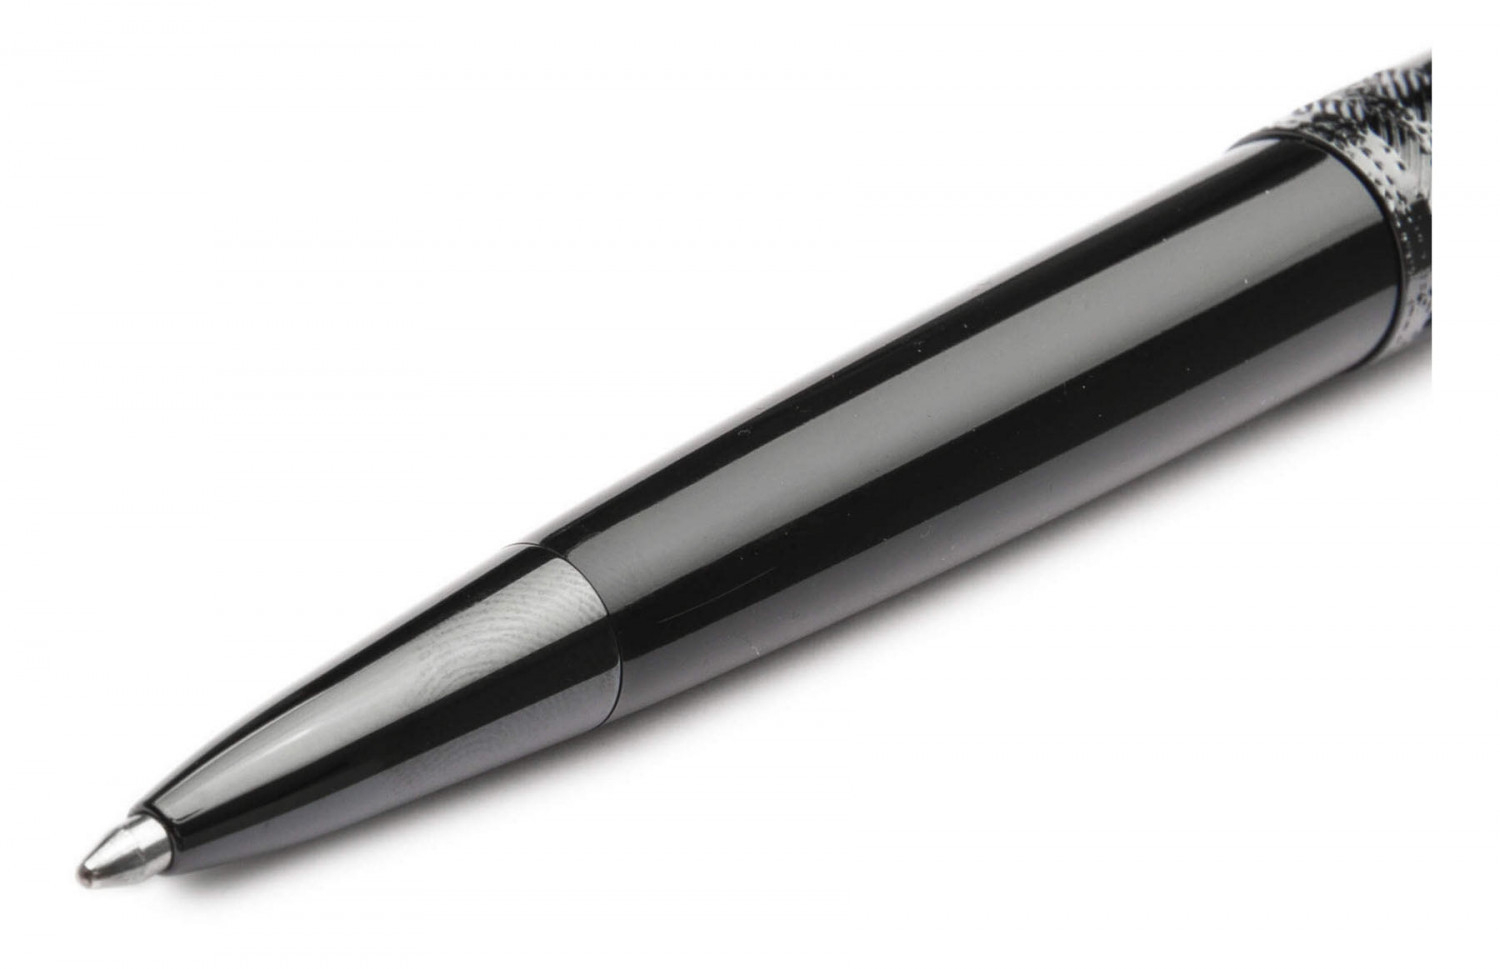 Penna a Sfera Avatar UR Black Glossy